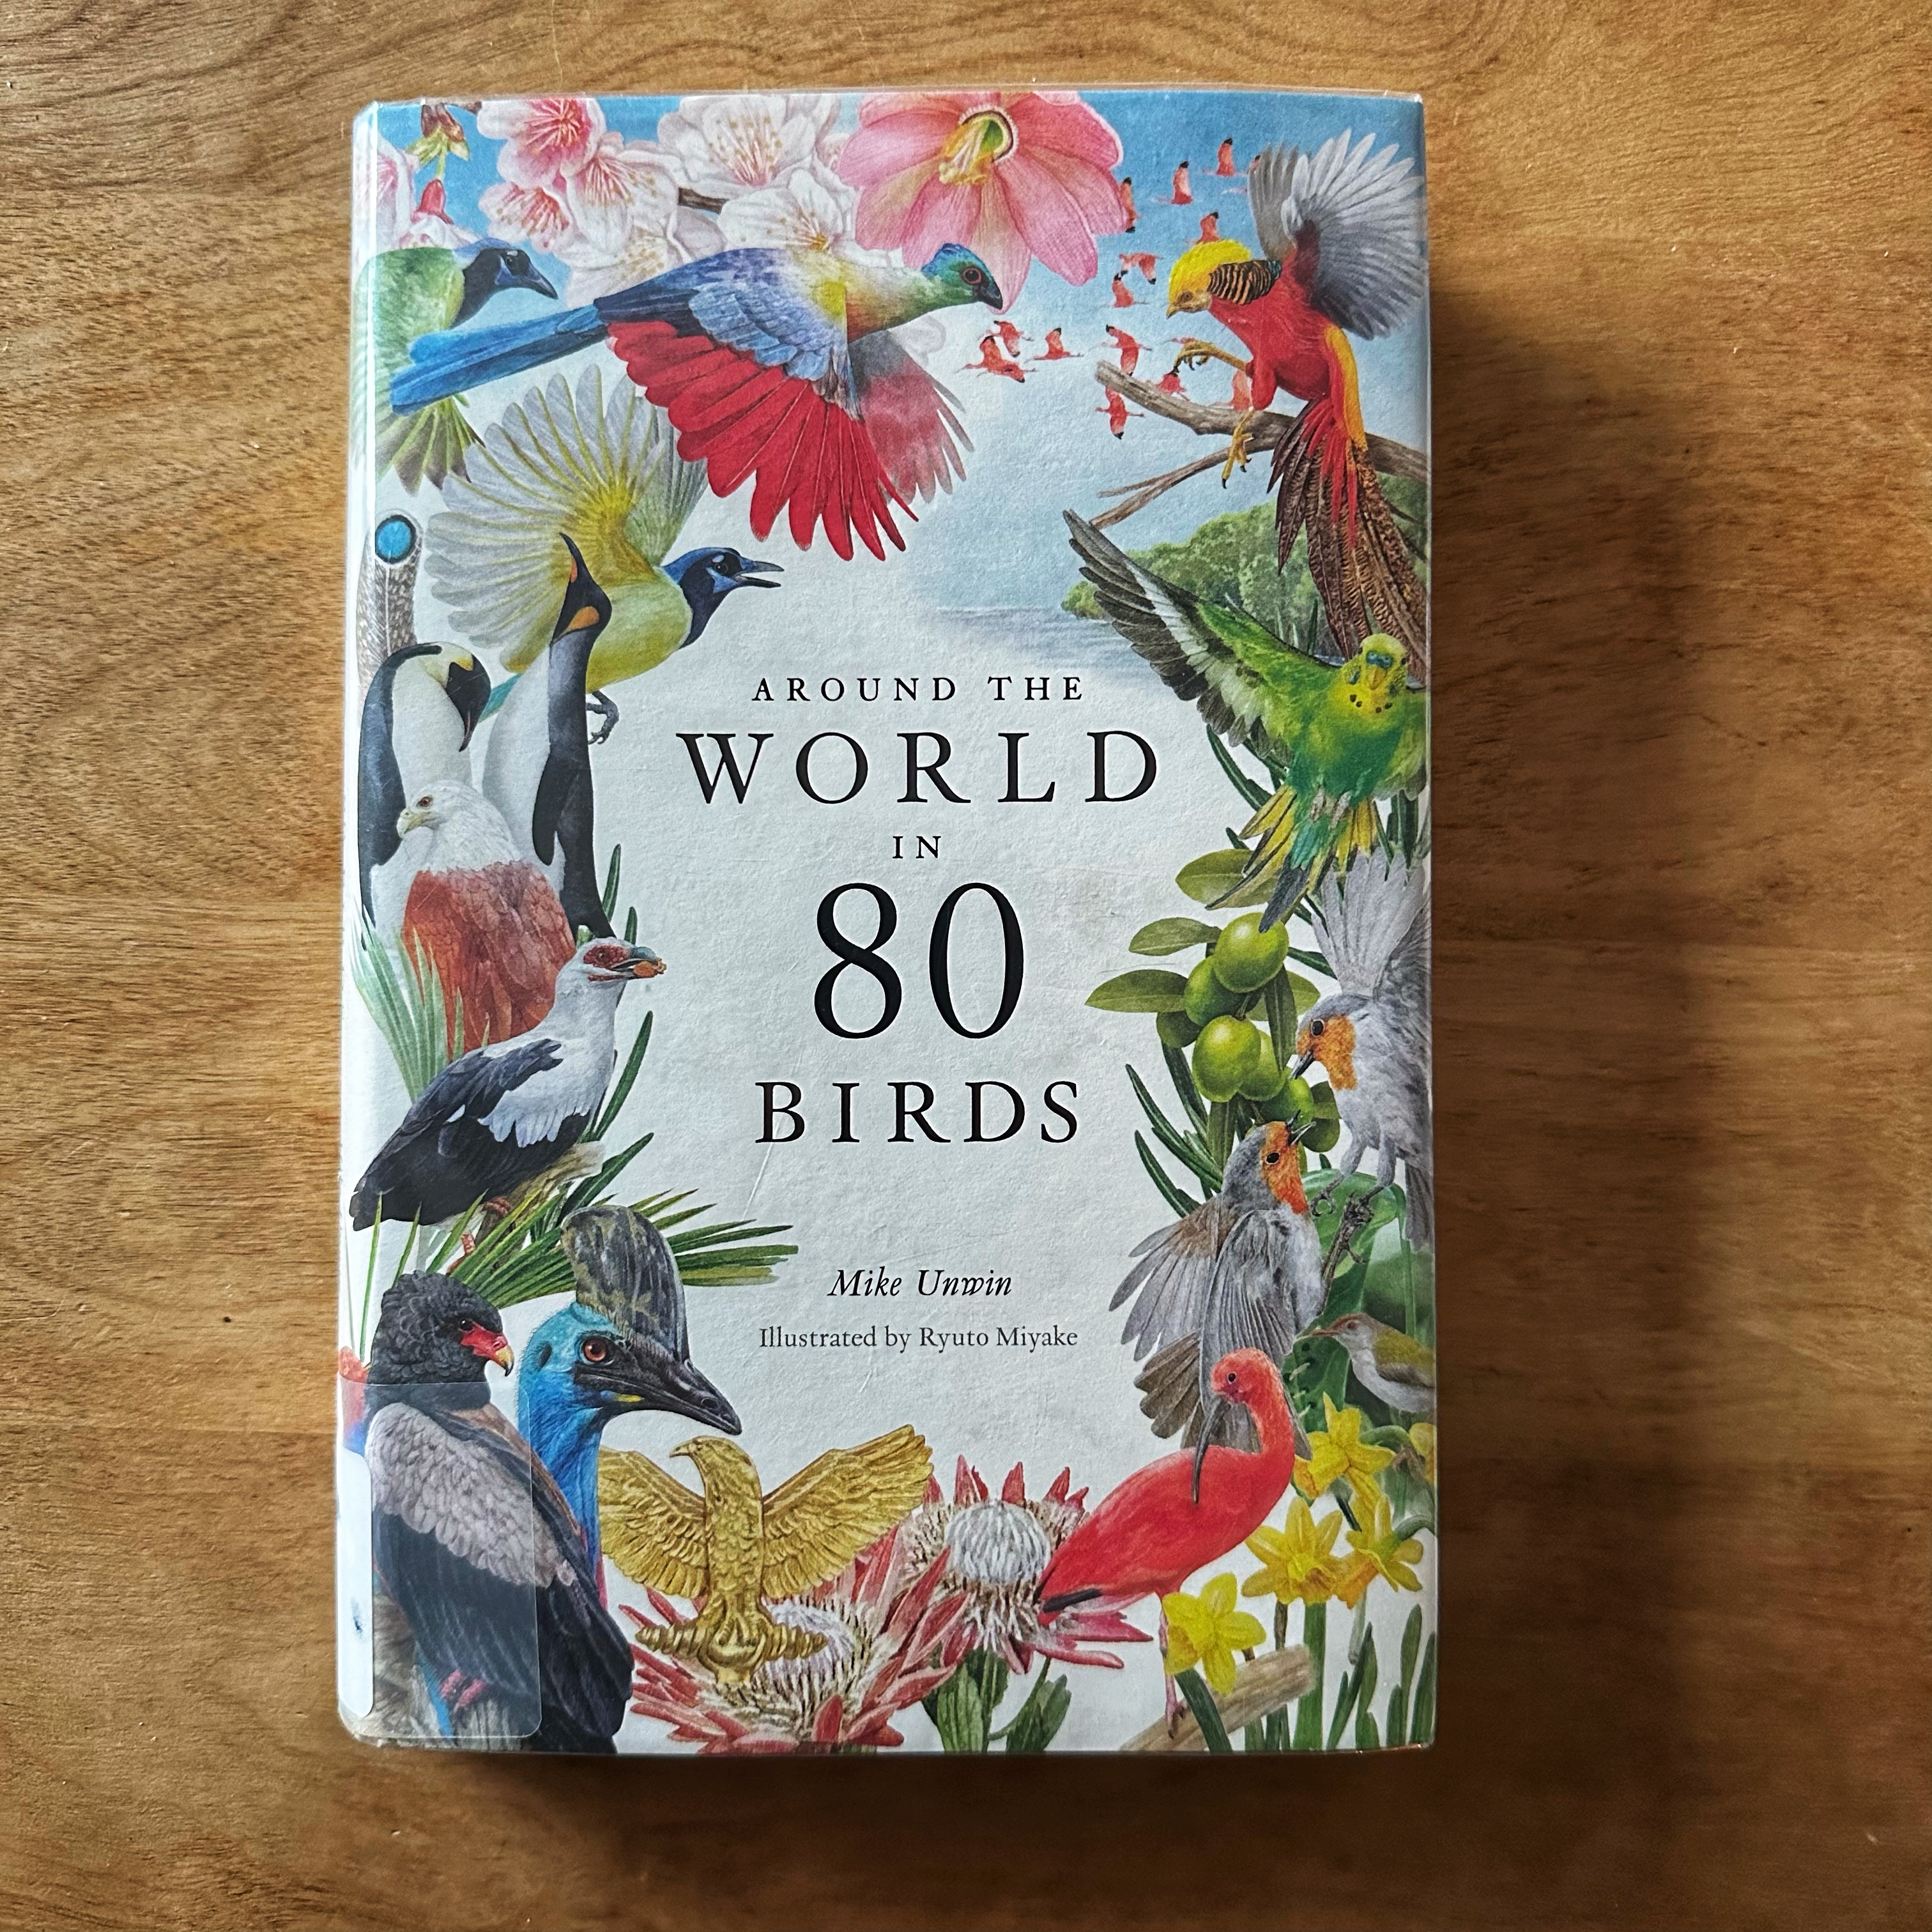 Mike Unwin and Ryuto Miyake and their "Around the World in 80 Birds,"